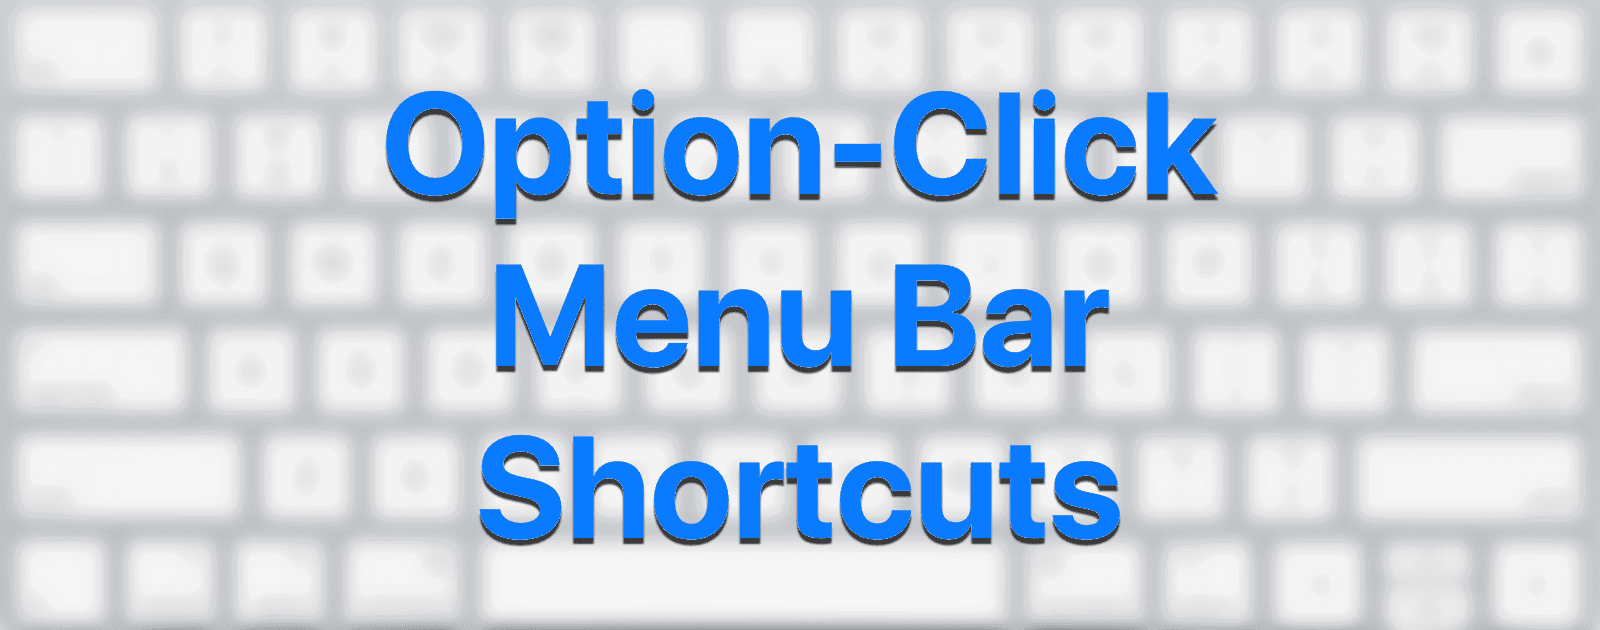 macOS: Some Useful Mac Menu Bar Shortcuts You Can Do With the Option Key